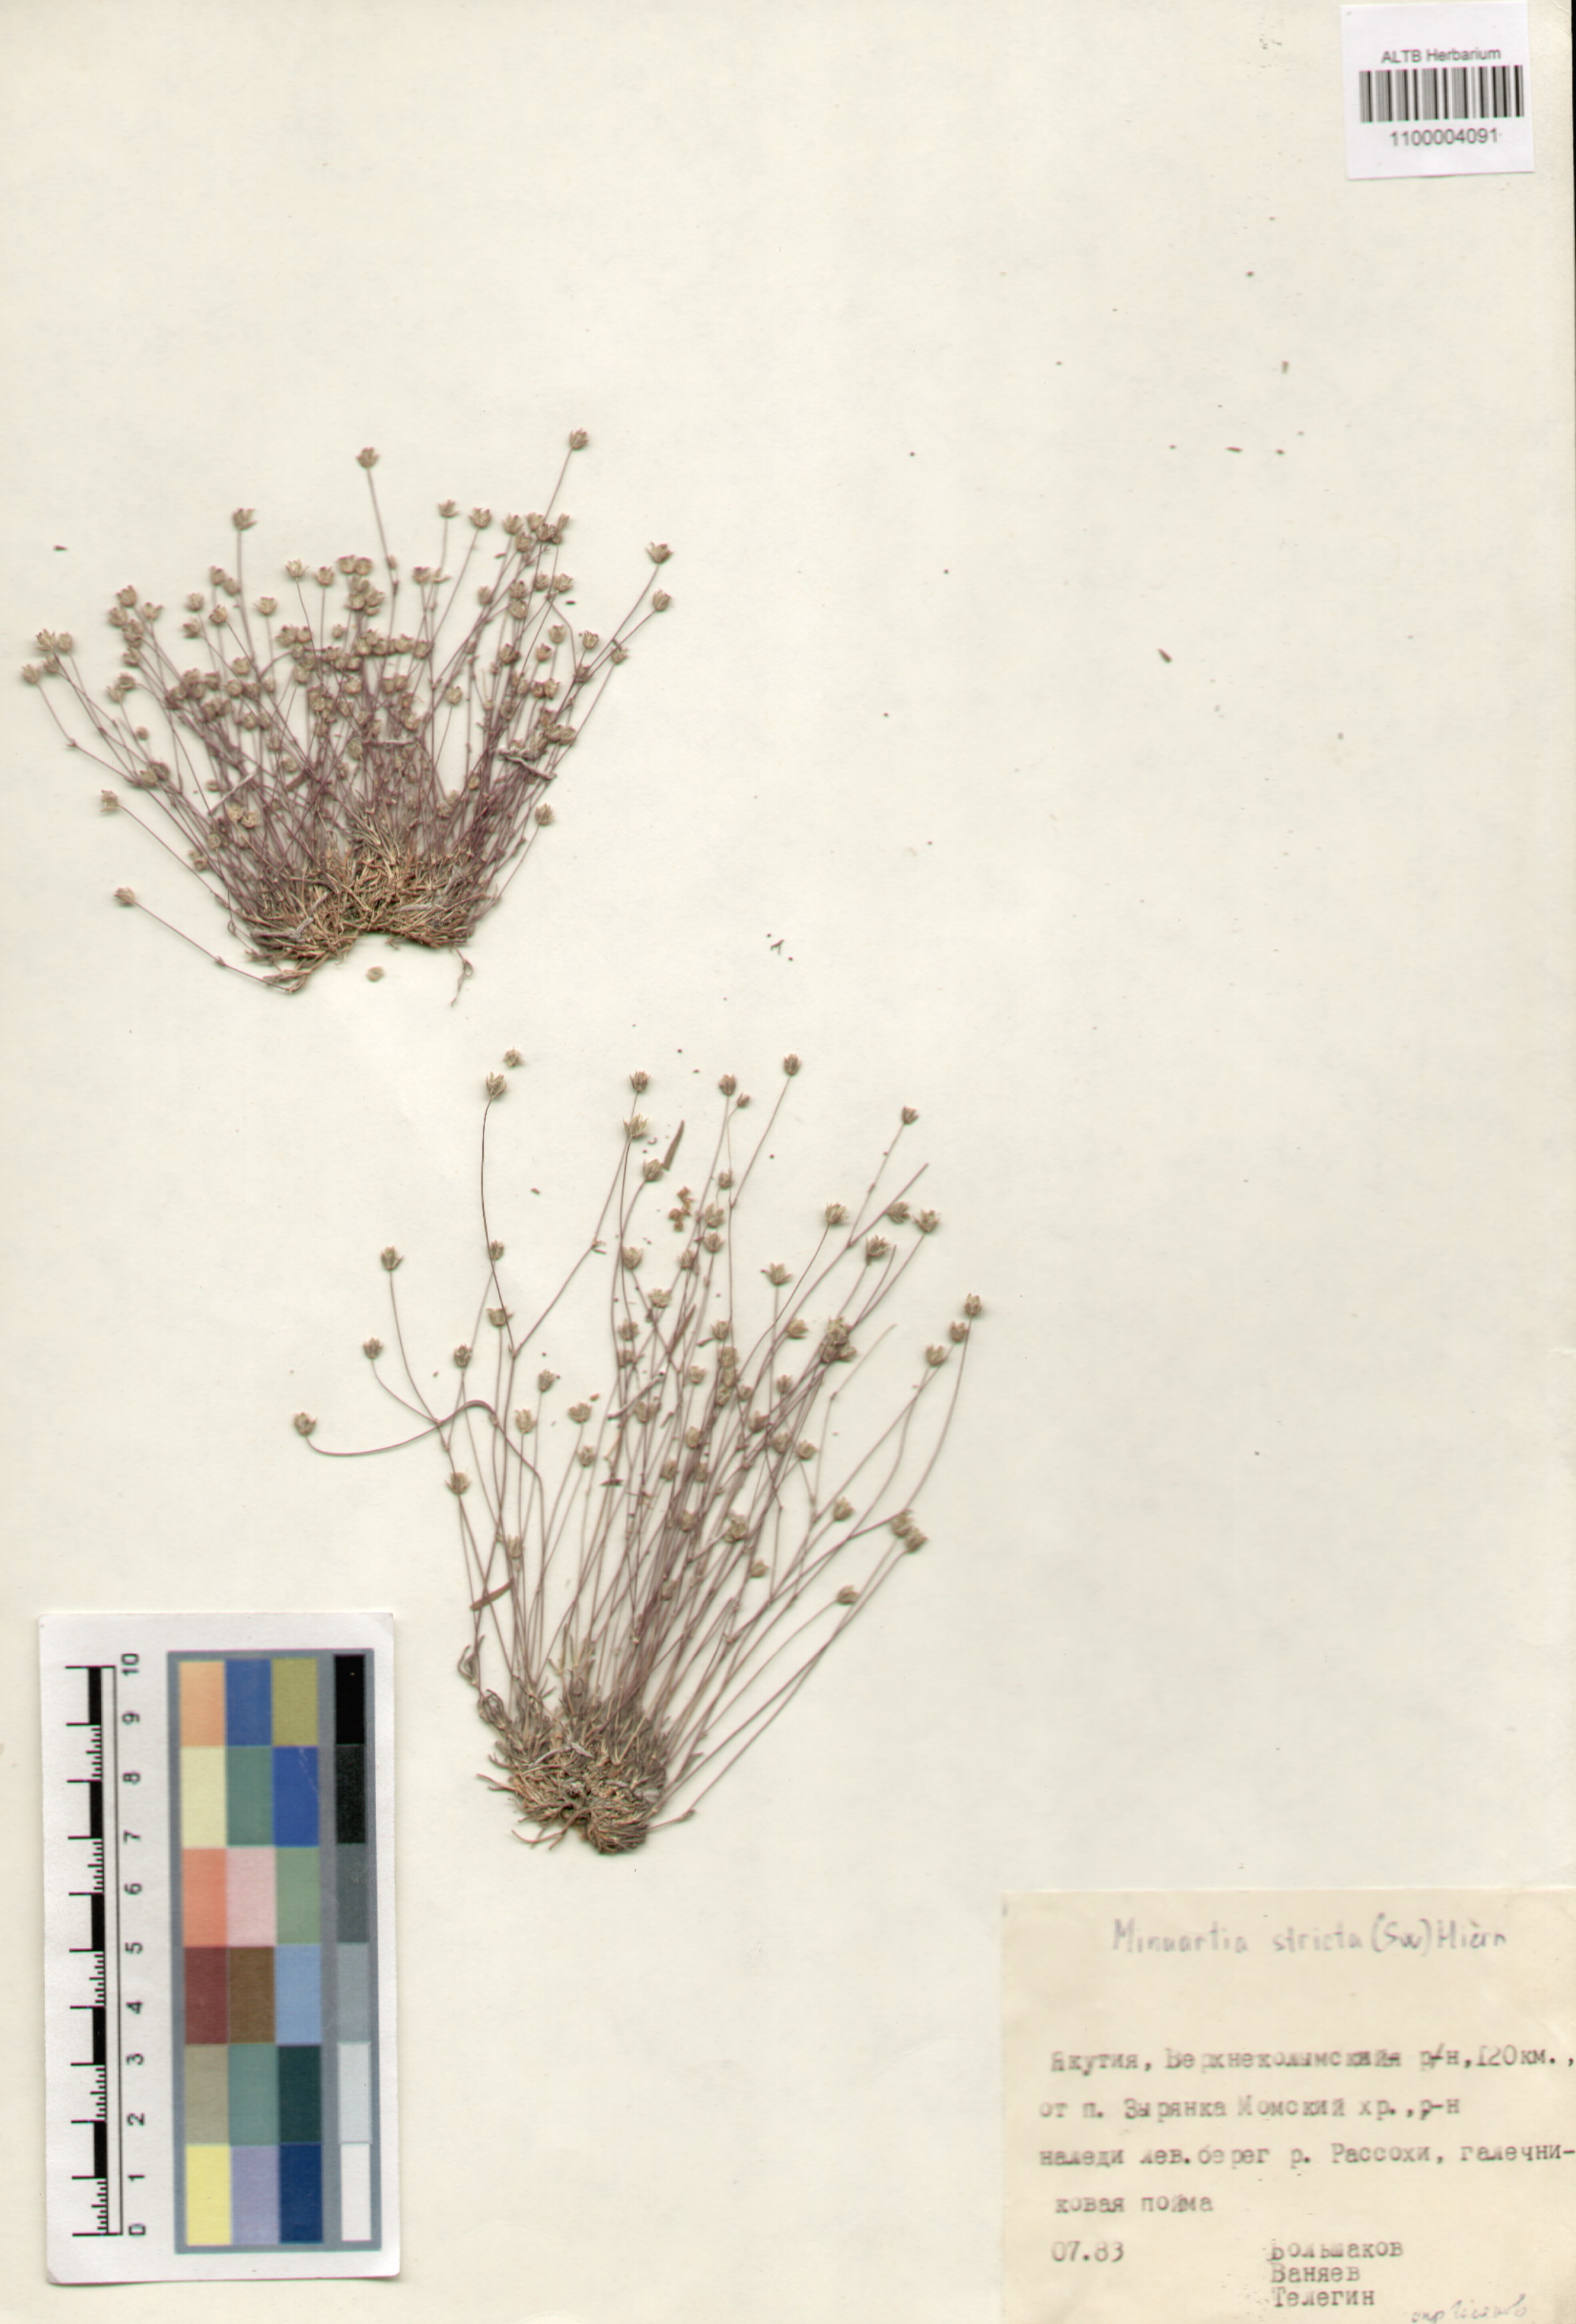 Caryophyllaceae,Minuartia stricta (Sw.) Hiern.